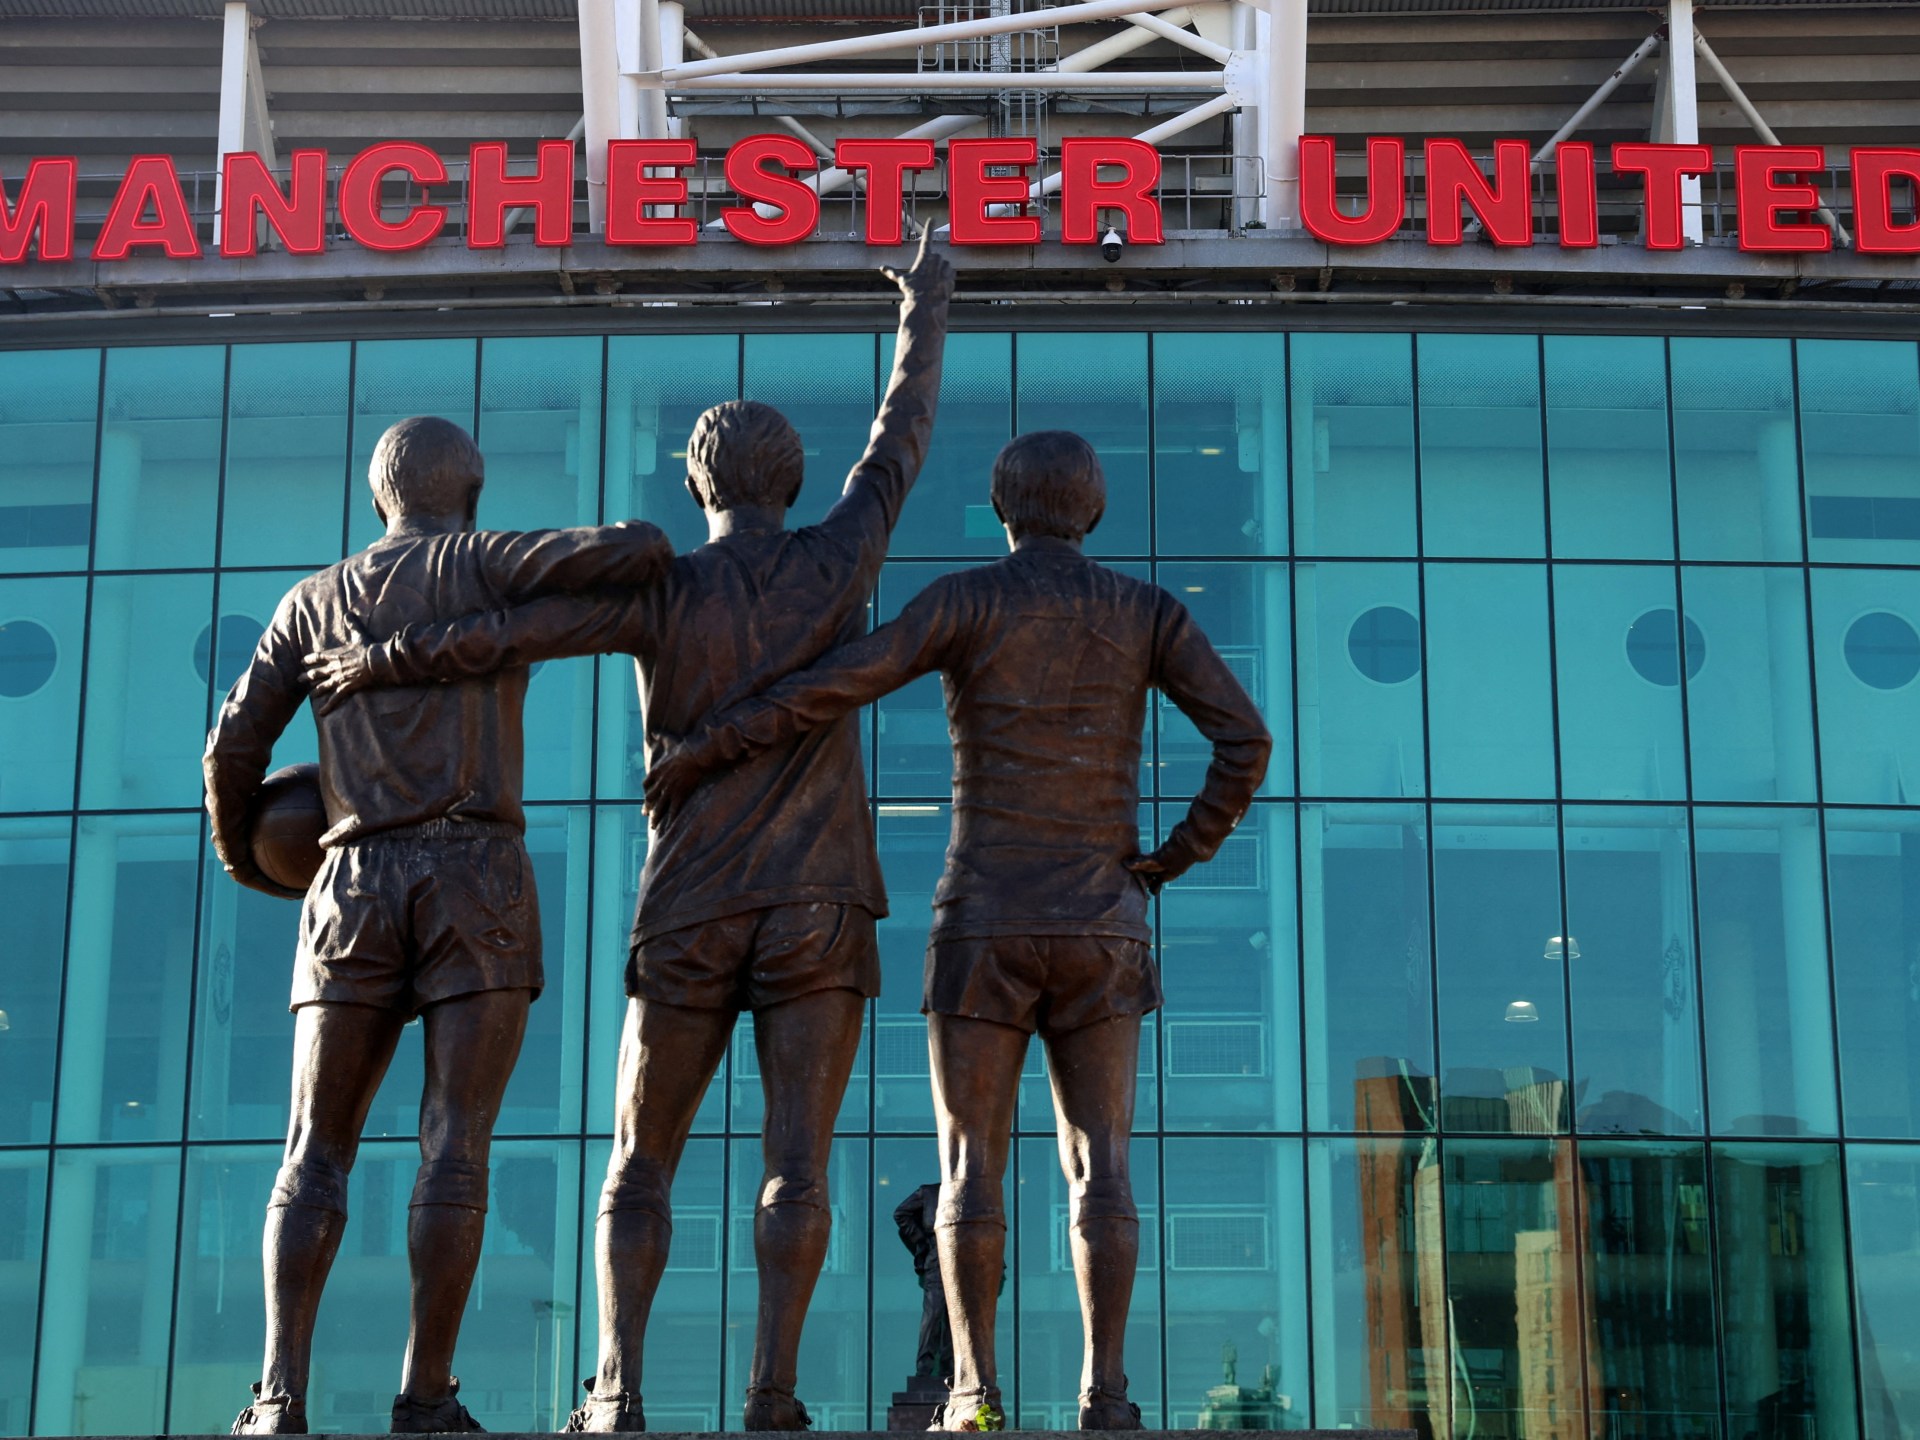 Qatar-based bid for Manchester United confirmed on deadline day